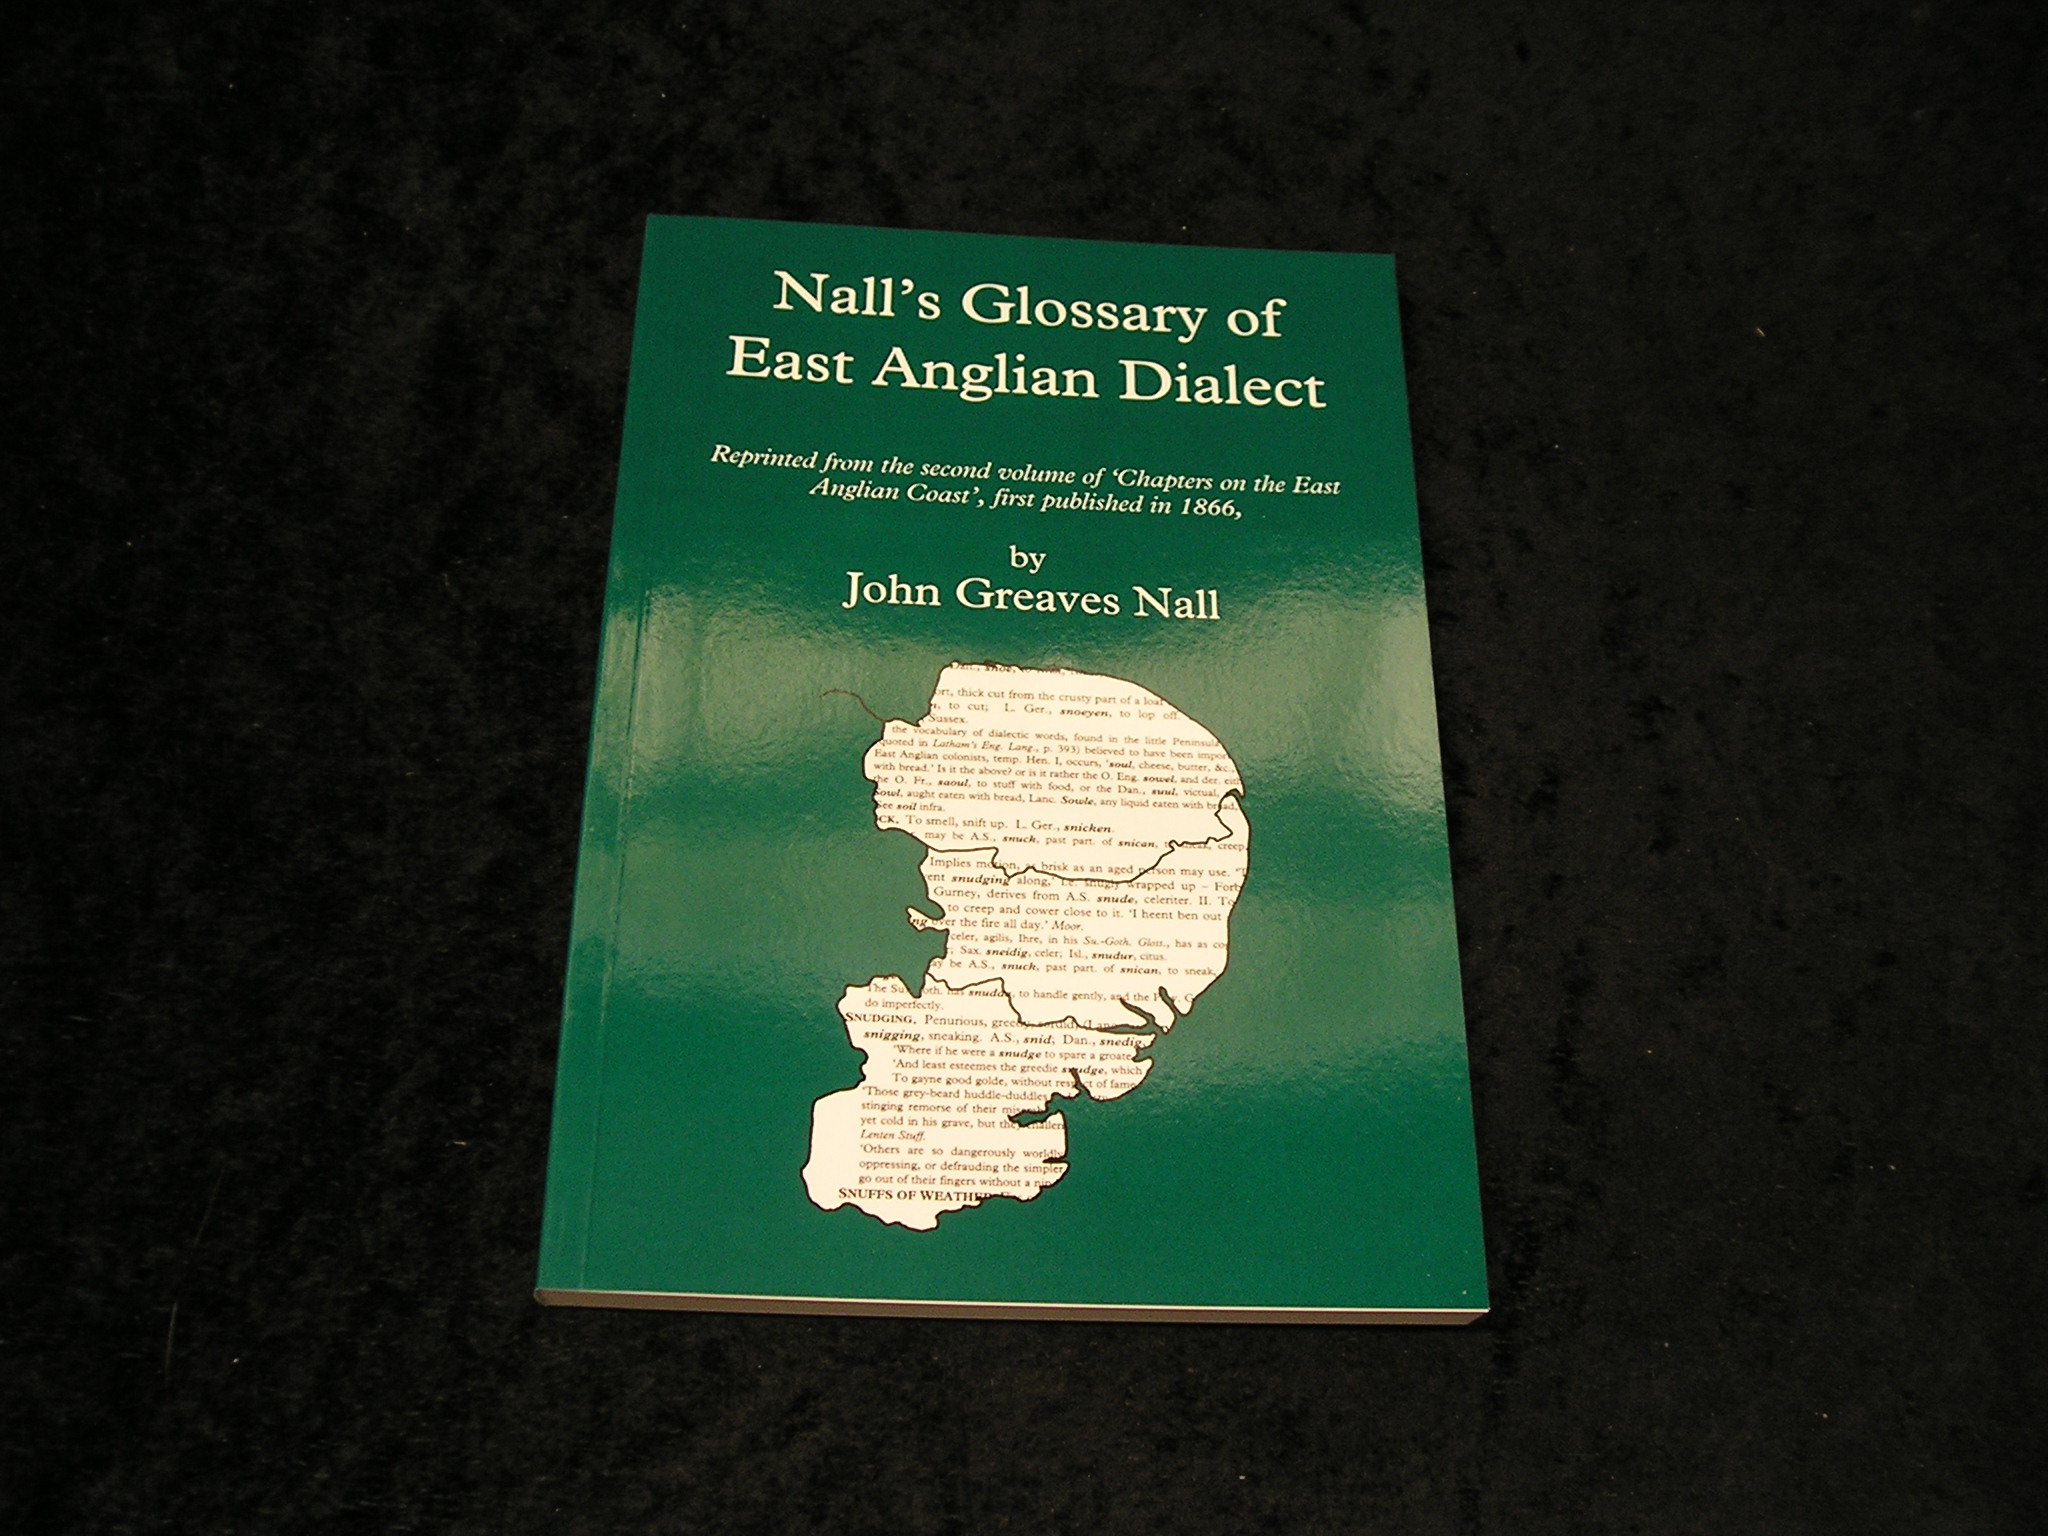 Nall's Glossary of East Anglian Dialect